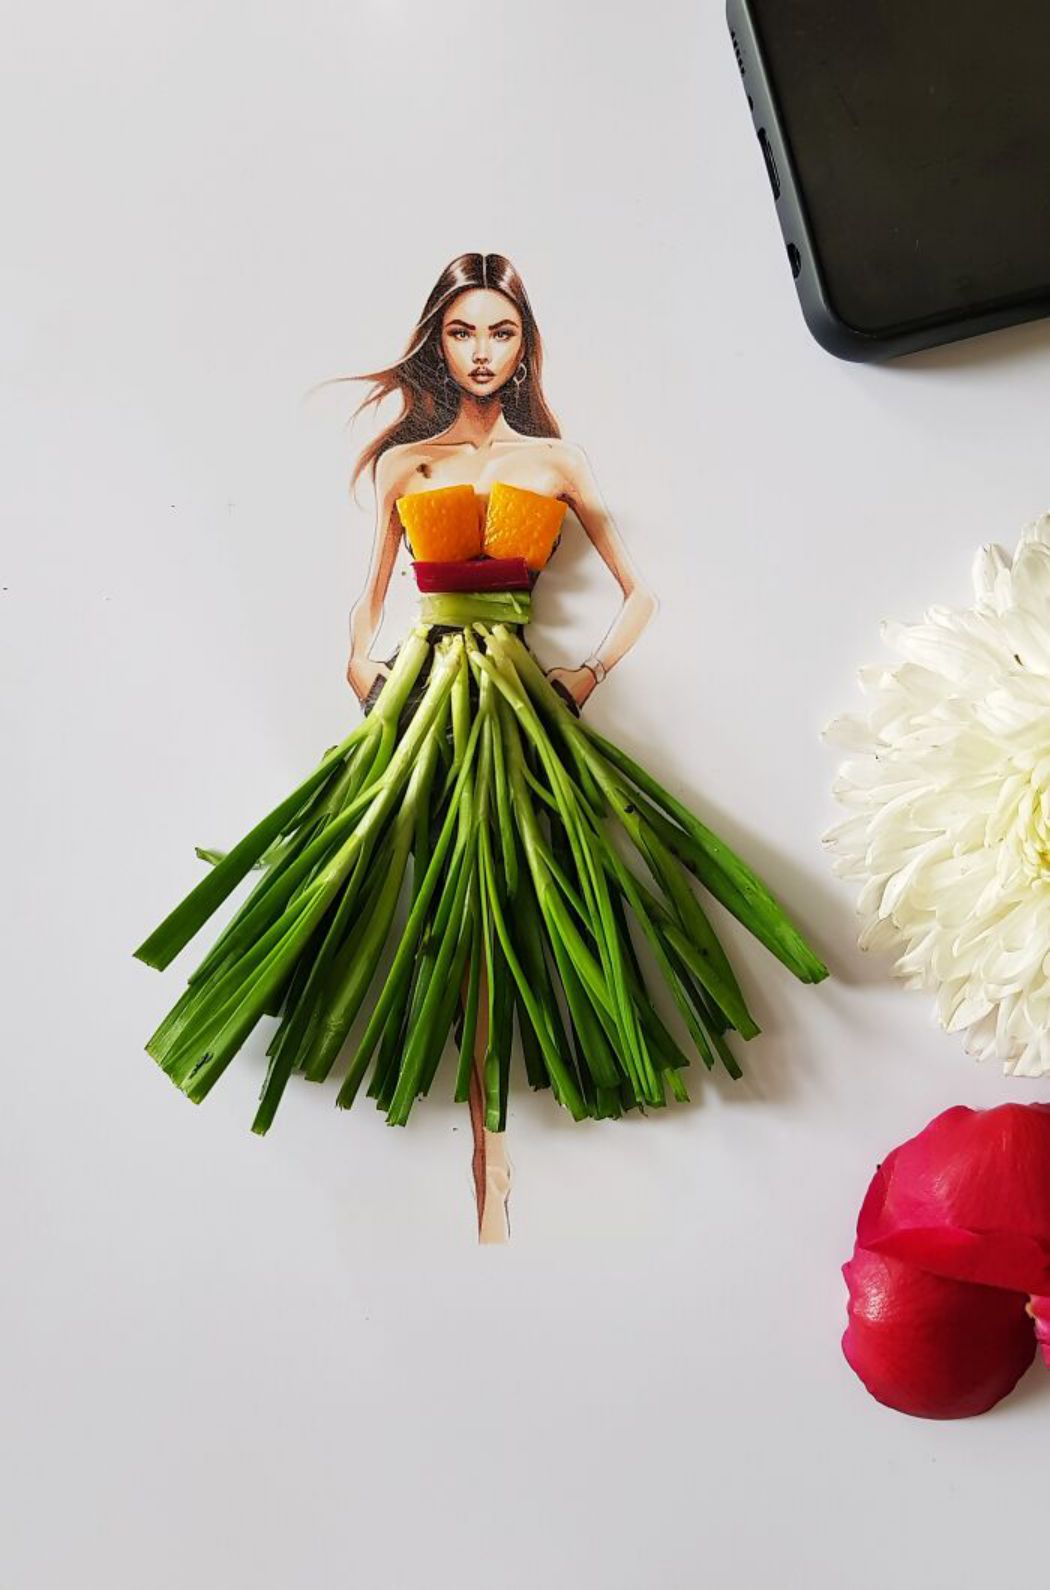 Digital Artist Monika Creates Unique Dresses Using Pulses, Fruit, And Vegetables (11)